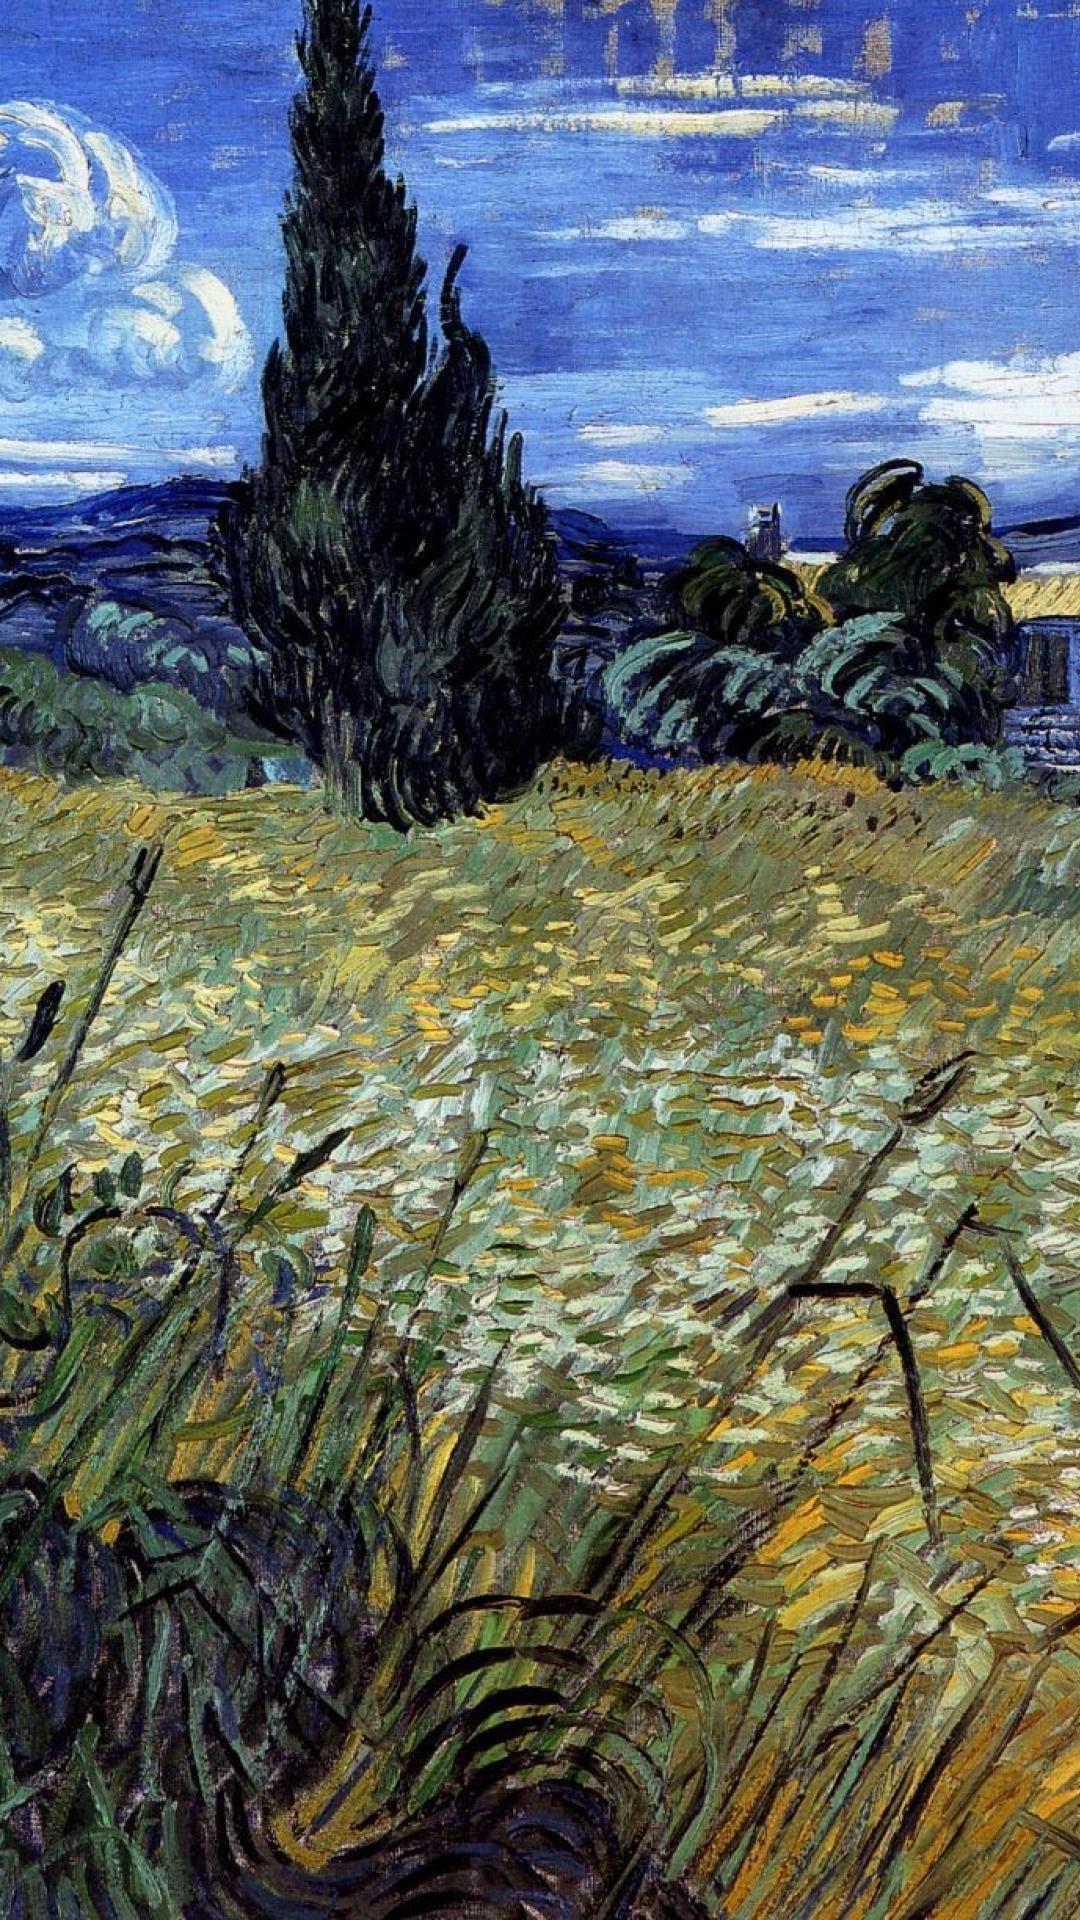 iPhone Van Gogh Wallpapers - Wallpaper Cave